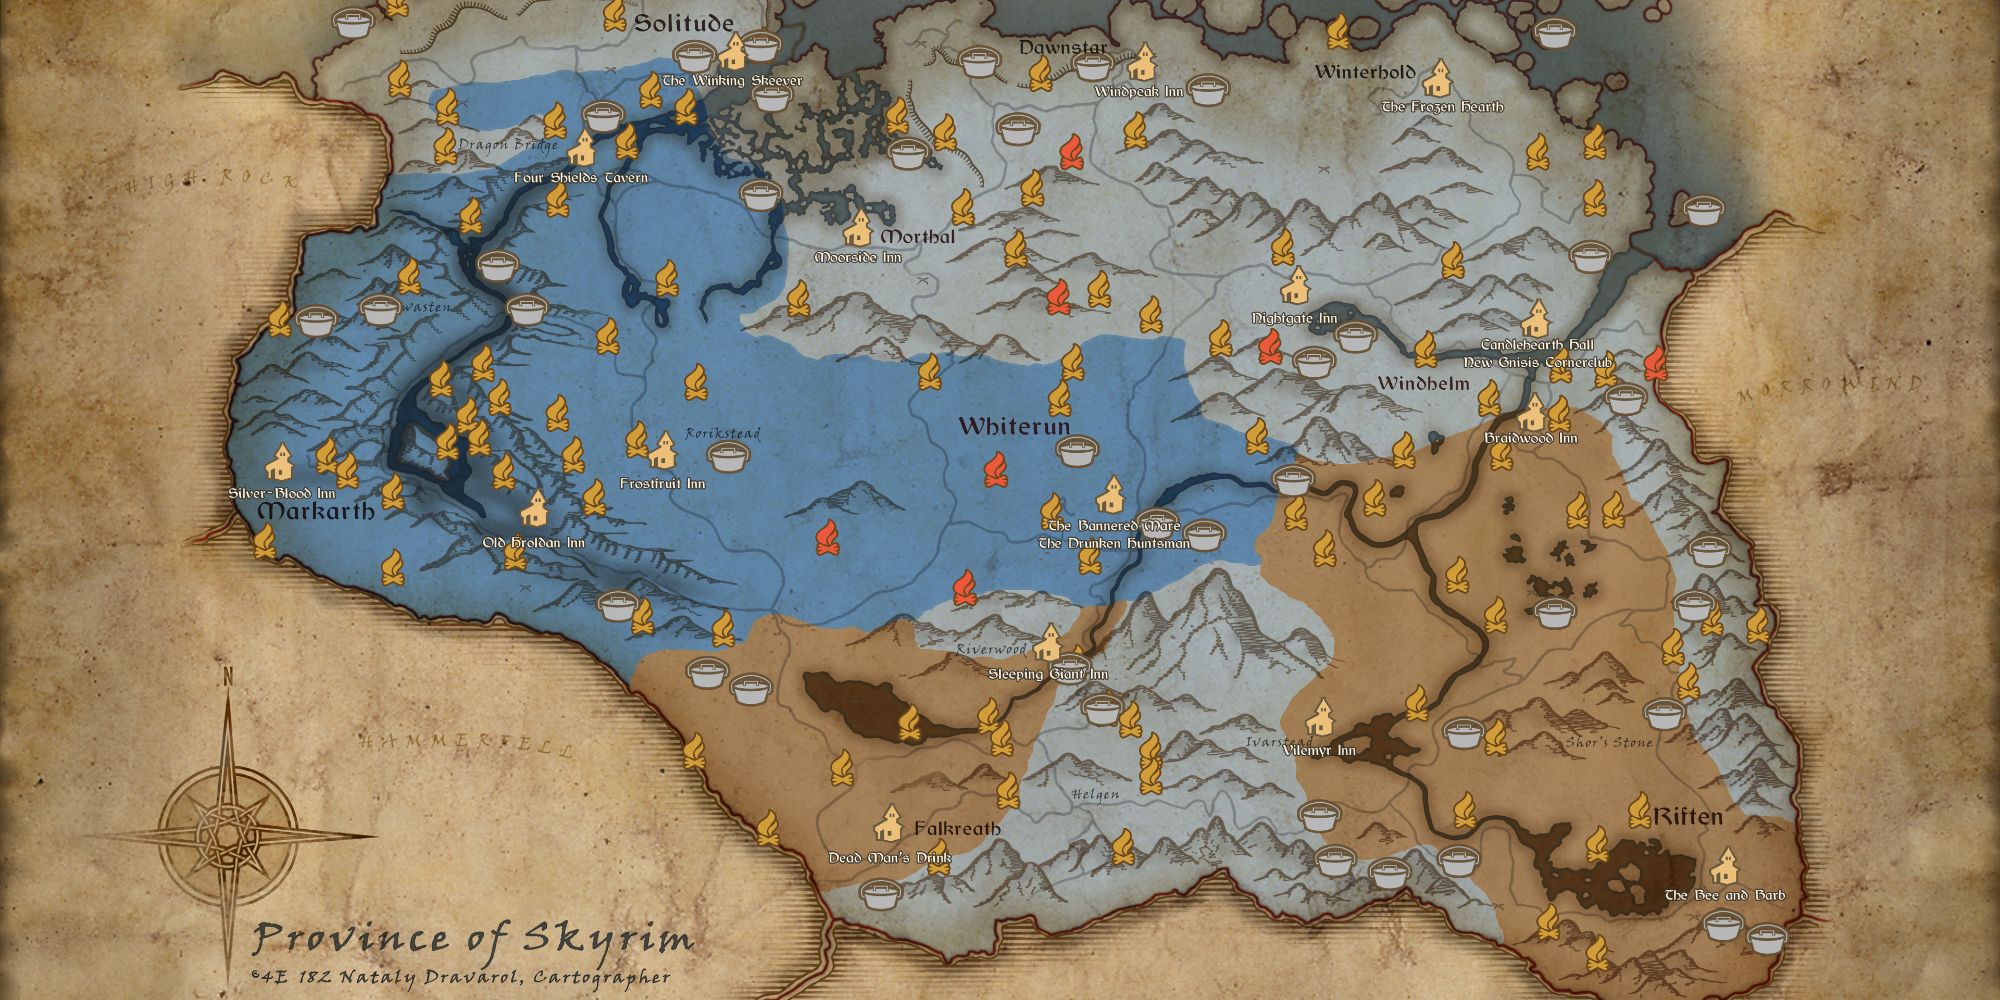 Bethesda's official survival map for Skyrim